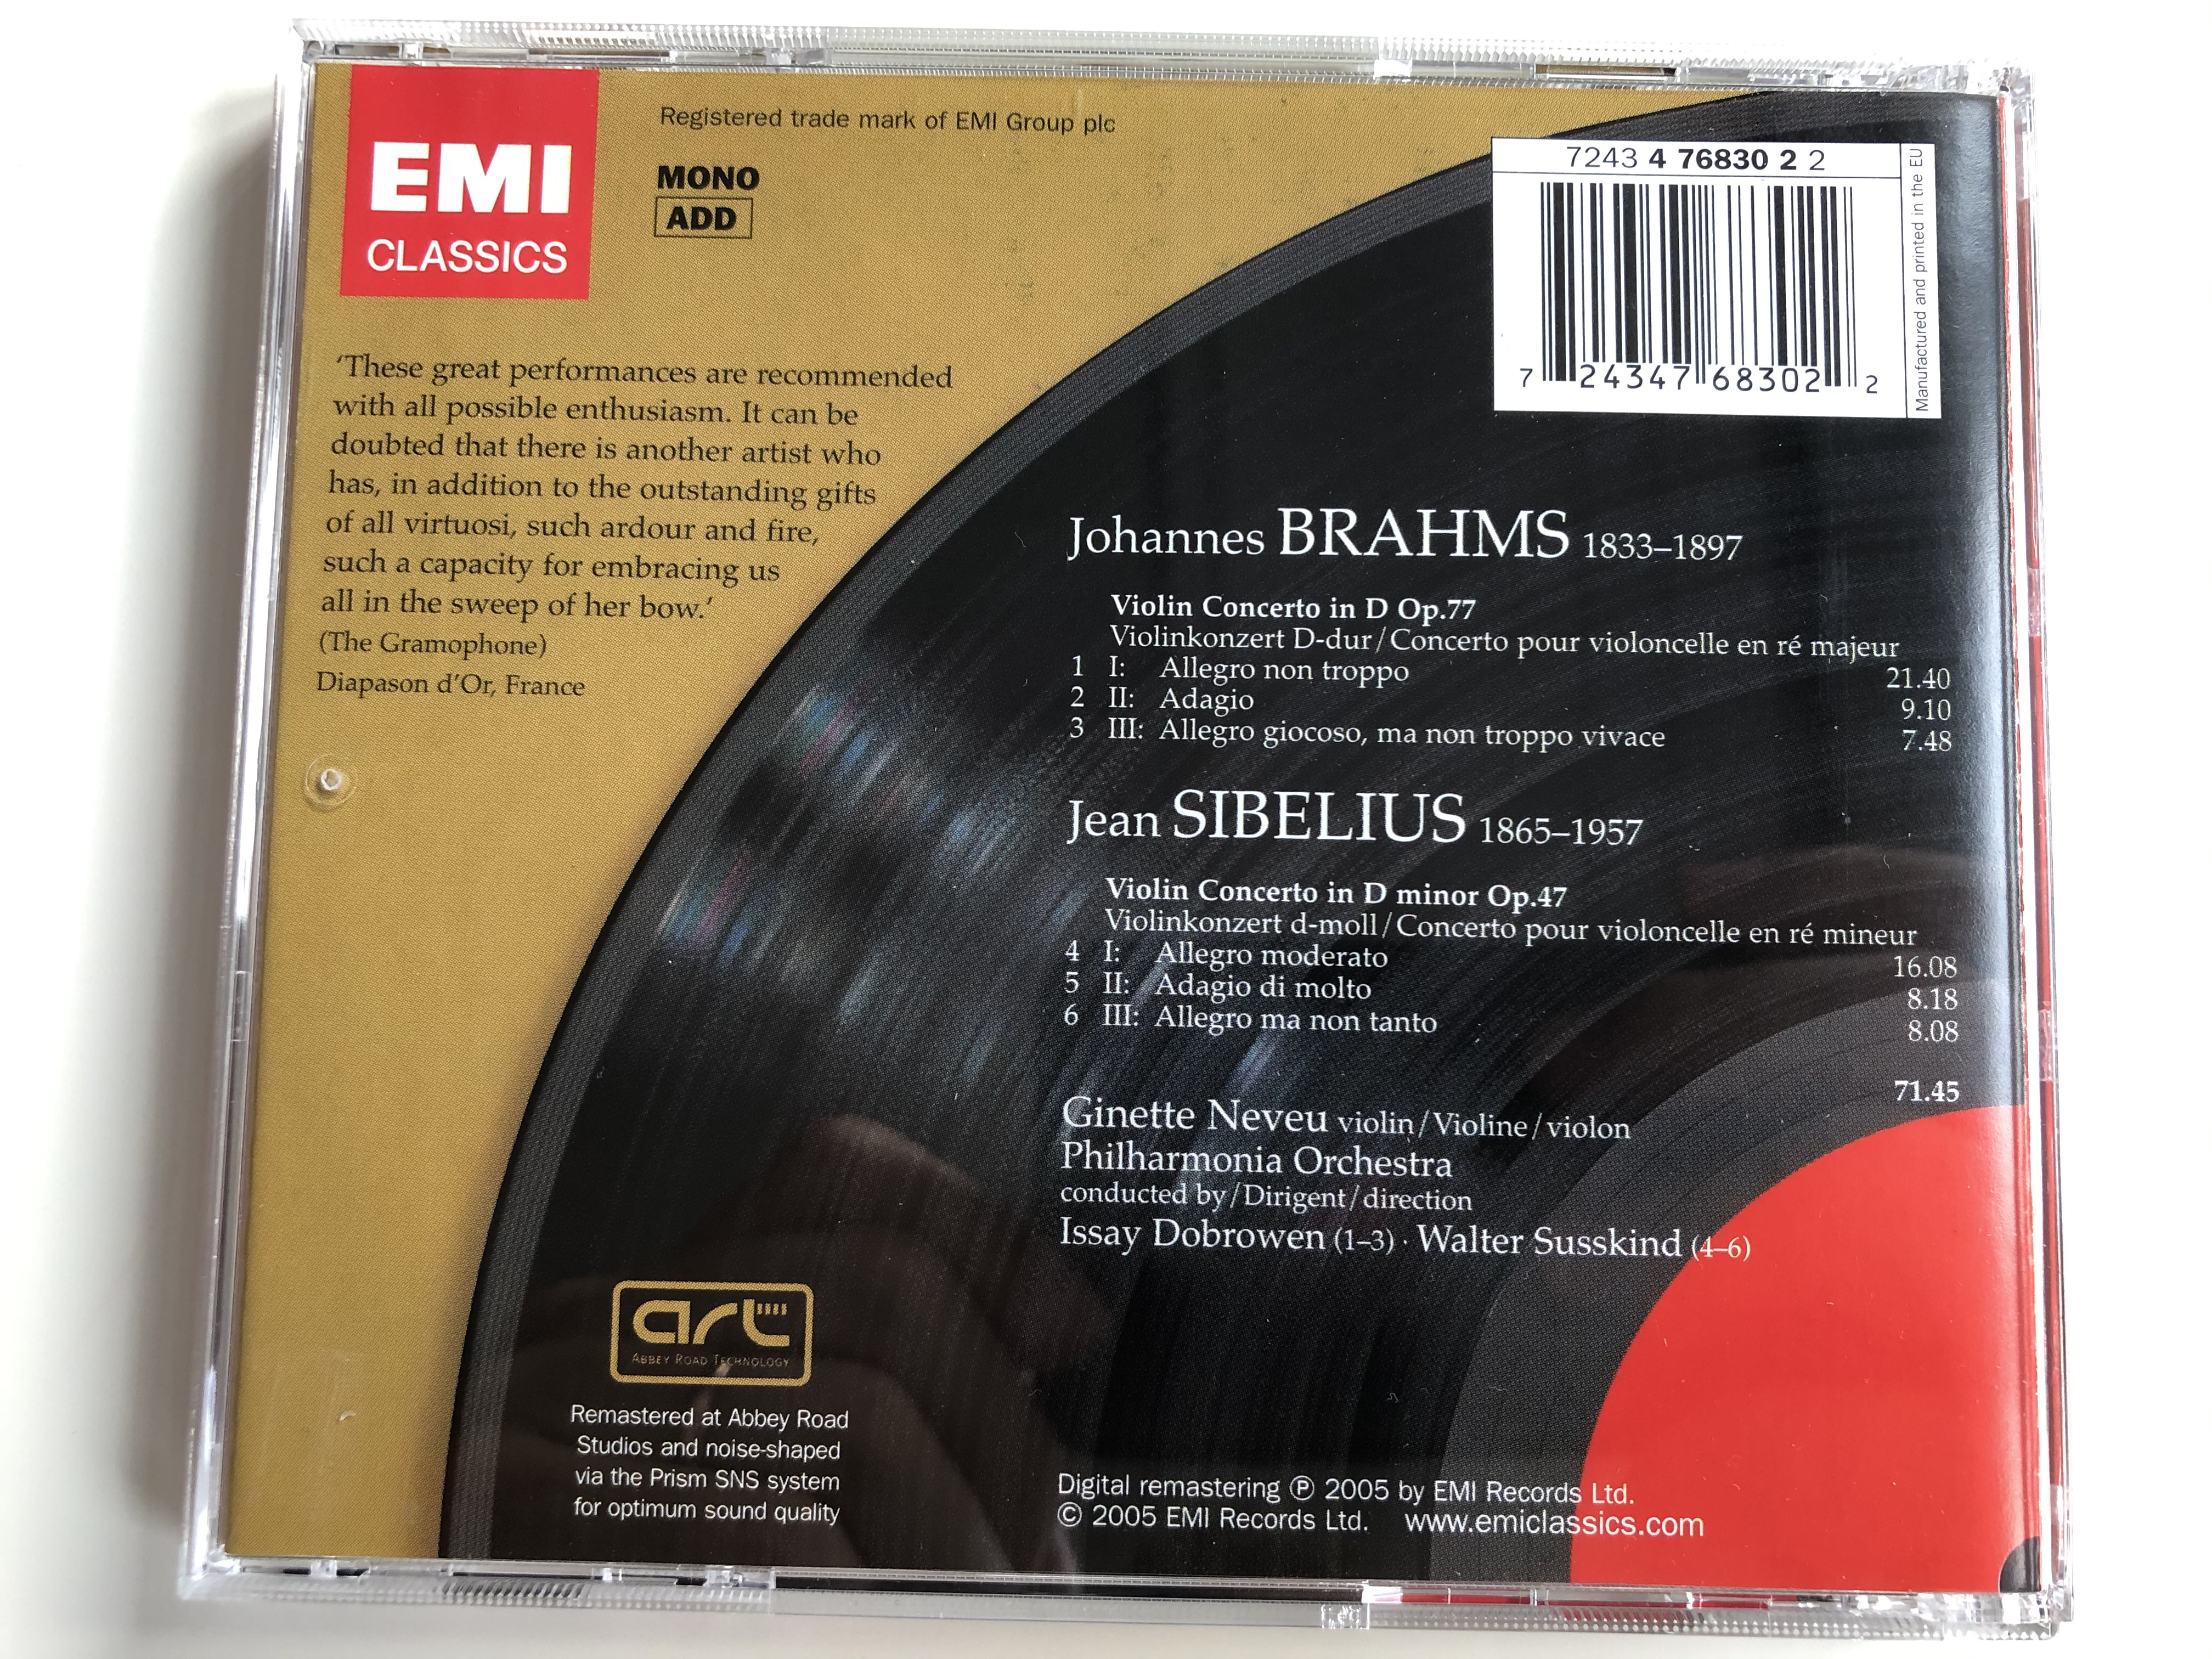 brahms-sibelius-violin-concertros-ginette-neveu-issay-dobrowen-walter-susskind-philharmonia-orchestra-emi-classics-audio-cd-2005-mono-7243-4-76830-2-2-5-.jpg